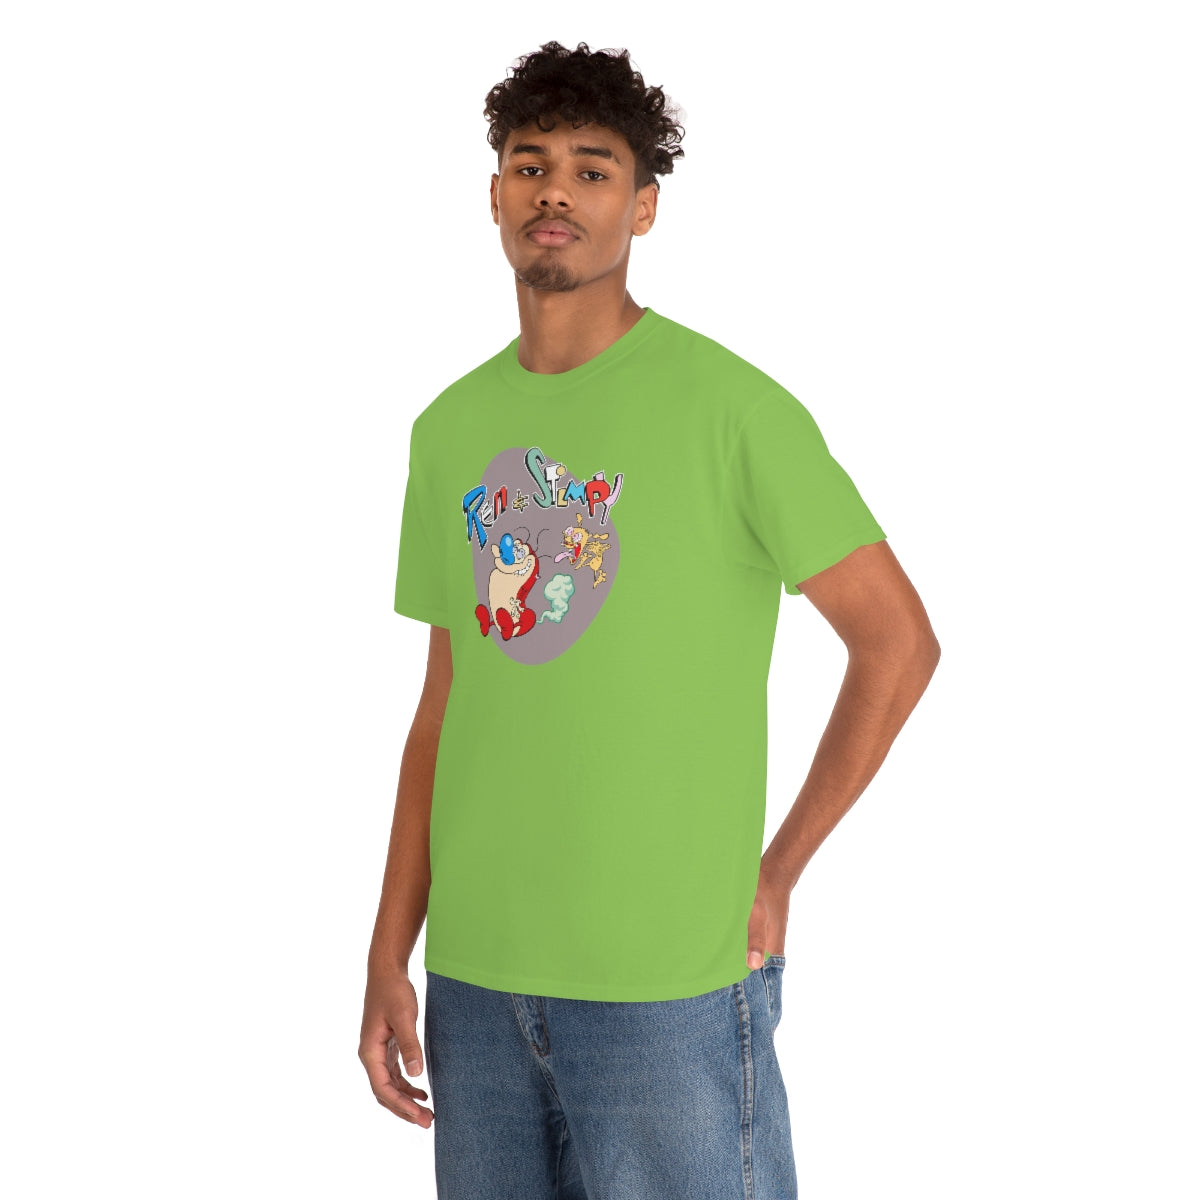 Ren and Stimpy T-Shirt